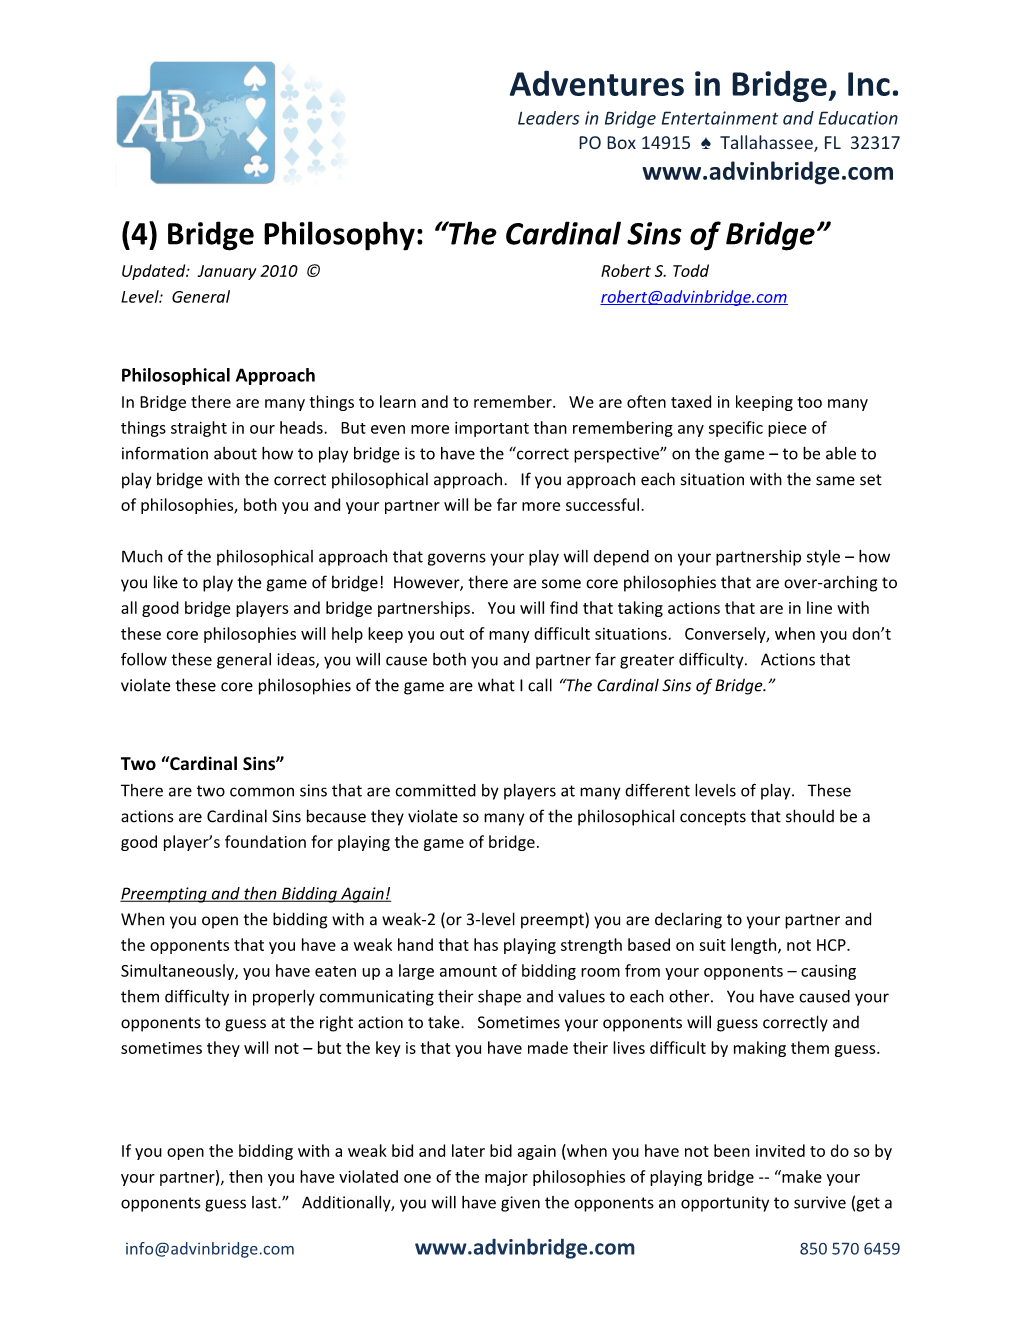 (4) Bridge Philosophy: the Cardinal Sins of Bridge